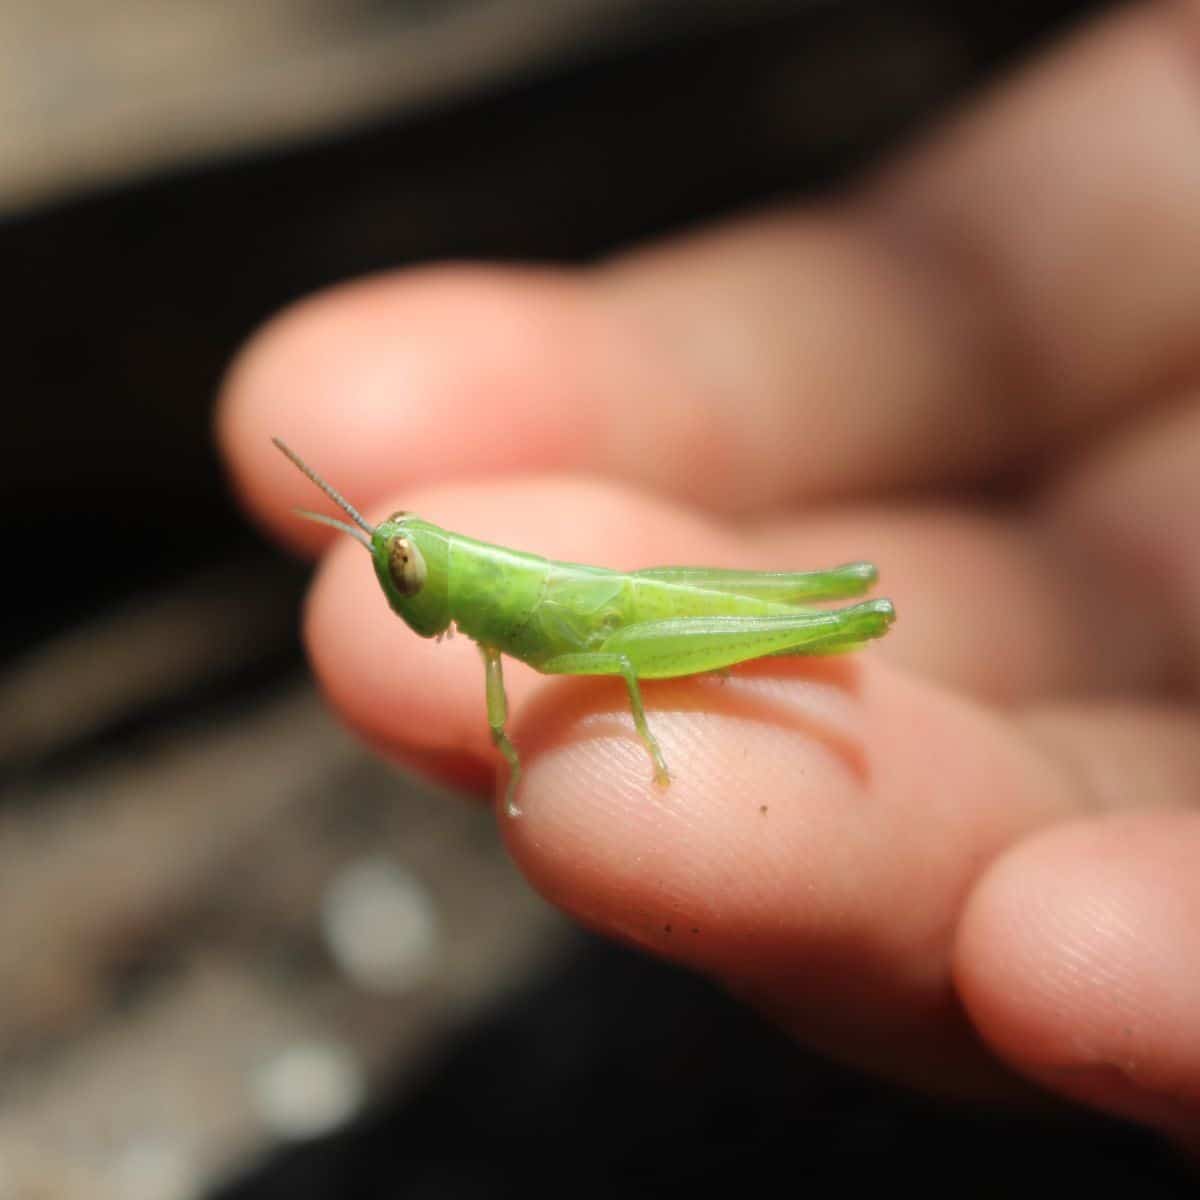 Green Grasshopper spiritual meaning